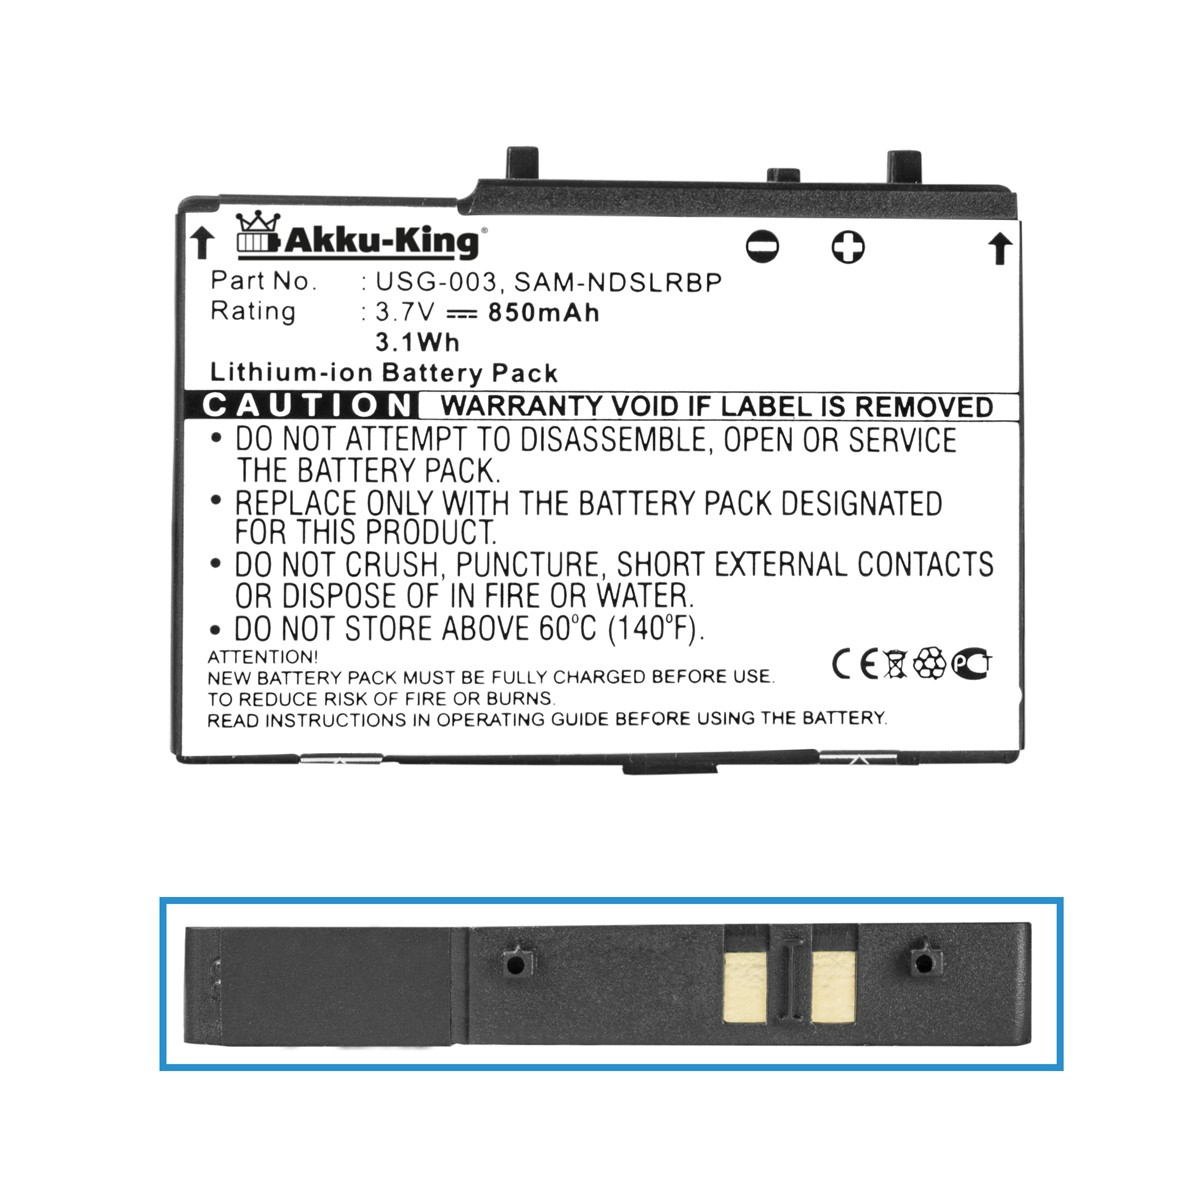 AKKU-KING Akku kompatibel mit Nintendo 850mAh Li-Ion Geräte-Akku, USG-003 Volt, 3.7